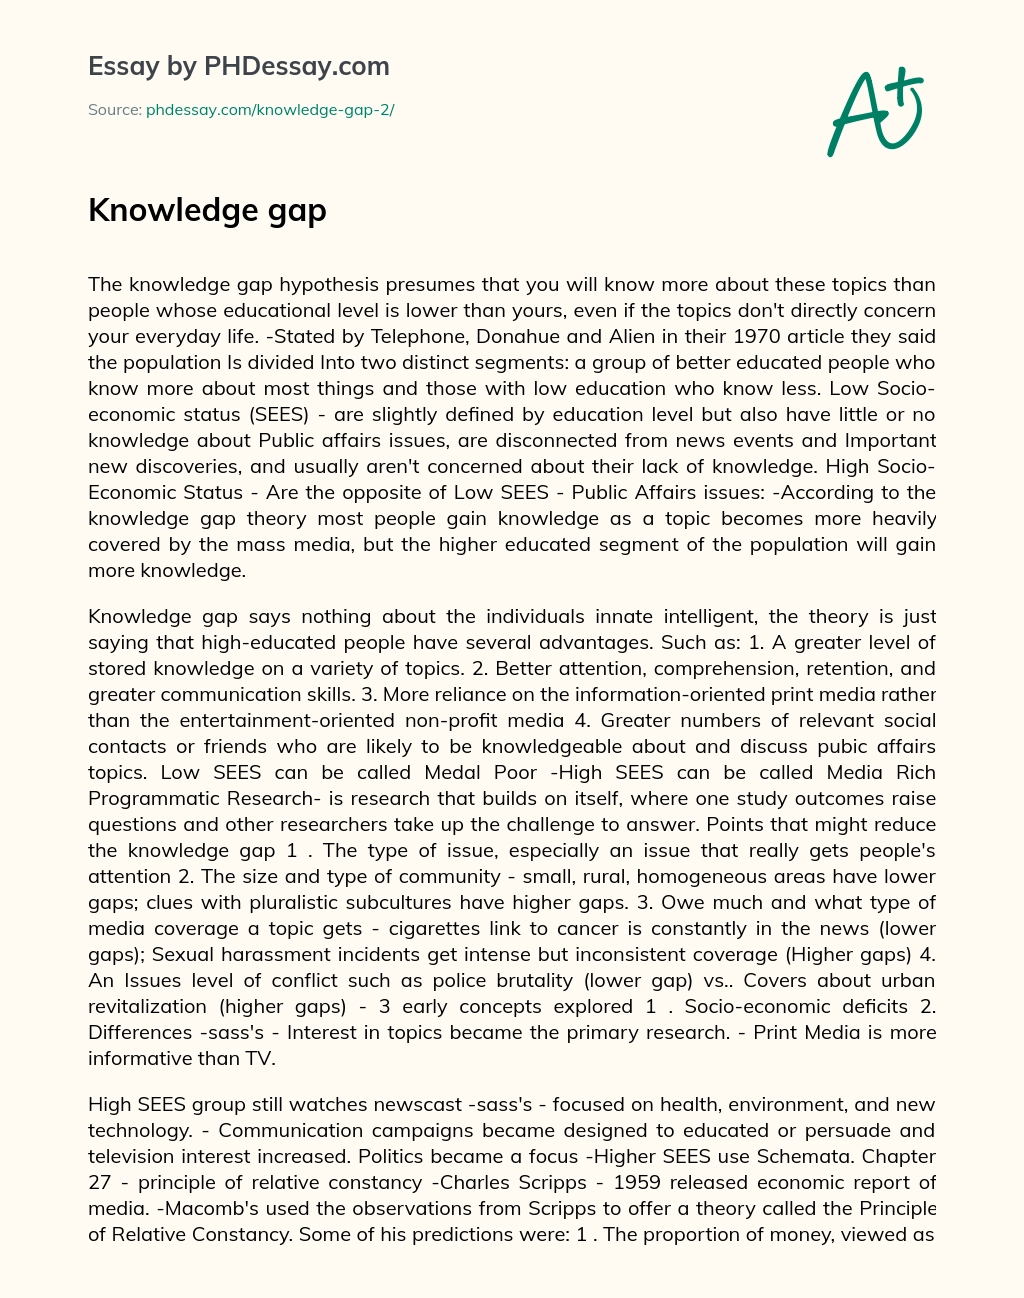 Knowledge gap essay